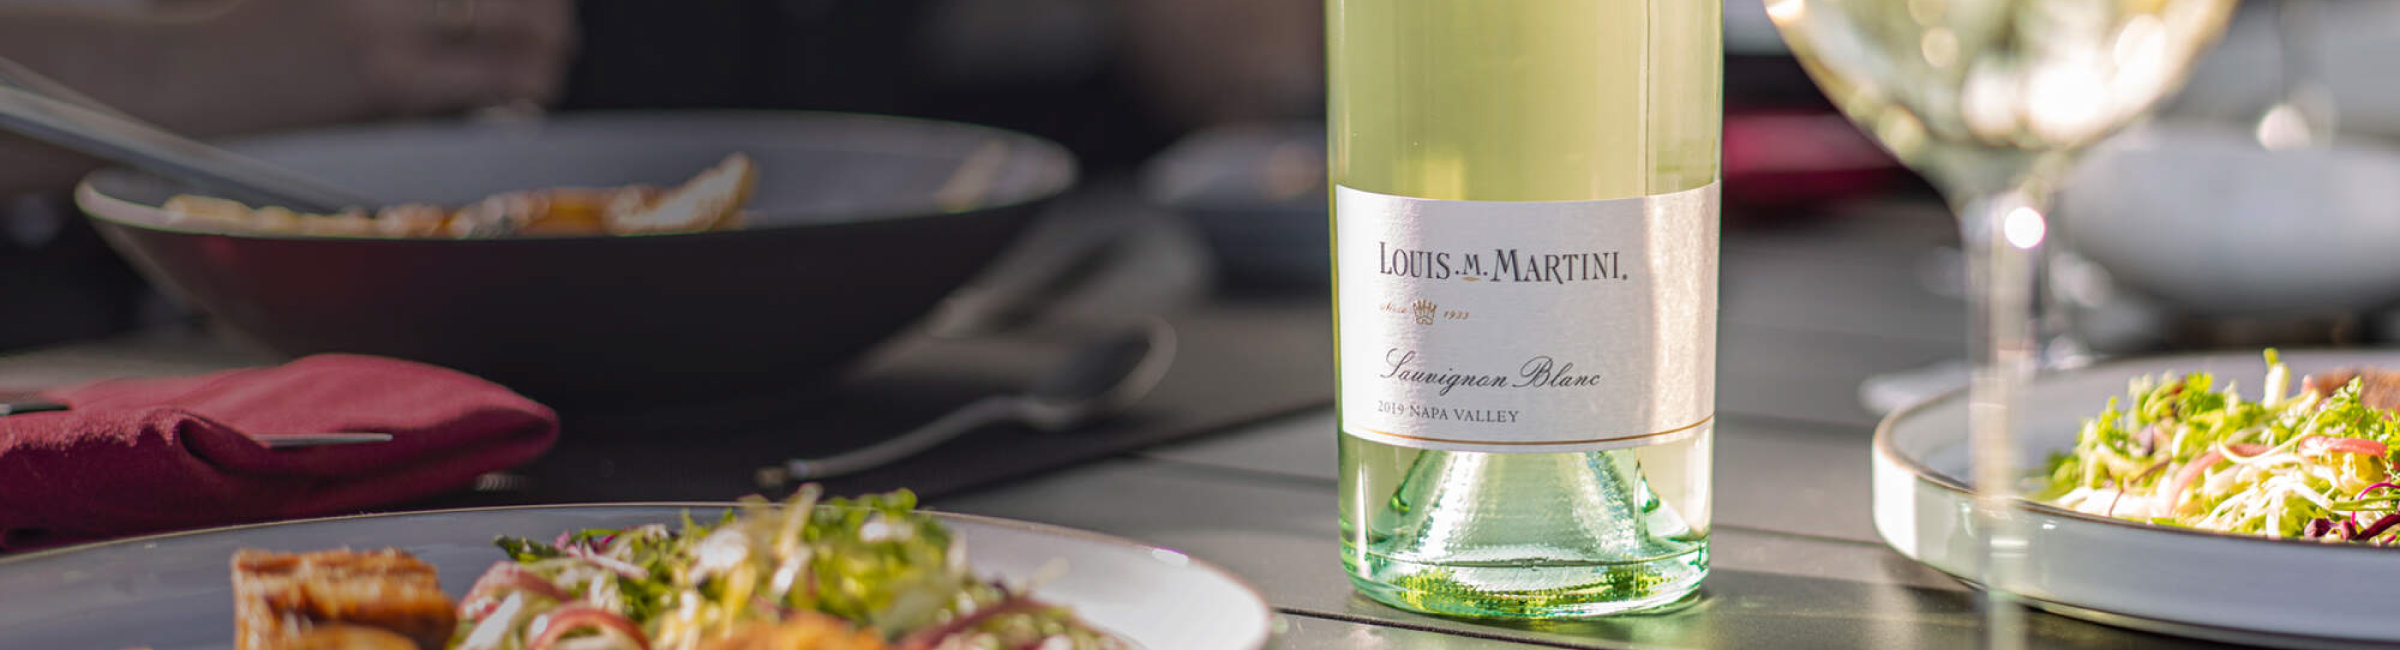 2019 Louis M. Martini Sauvignon Blanc bottle with food.